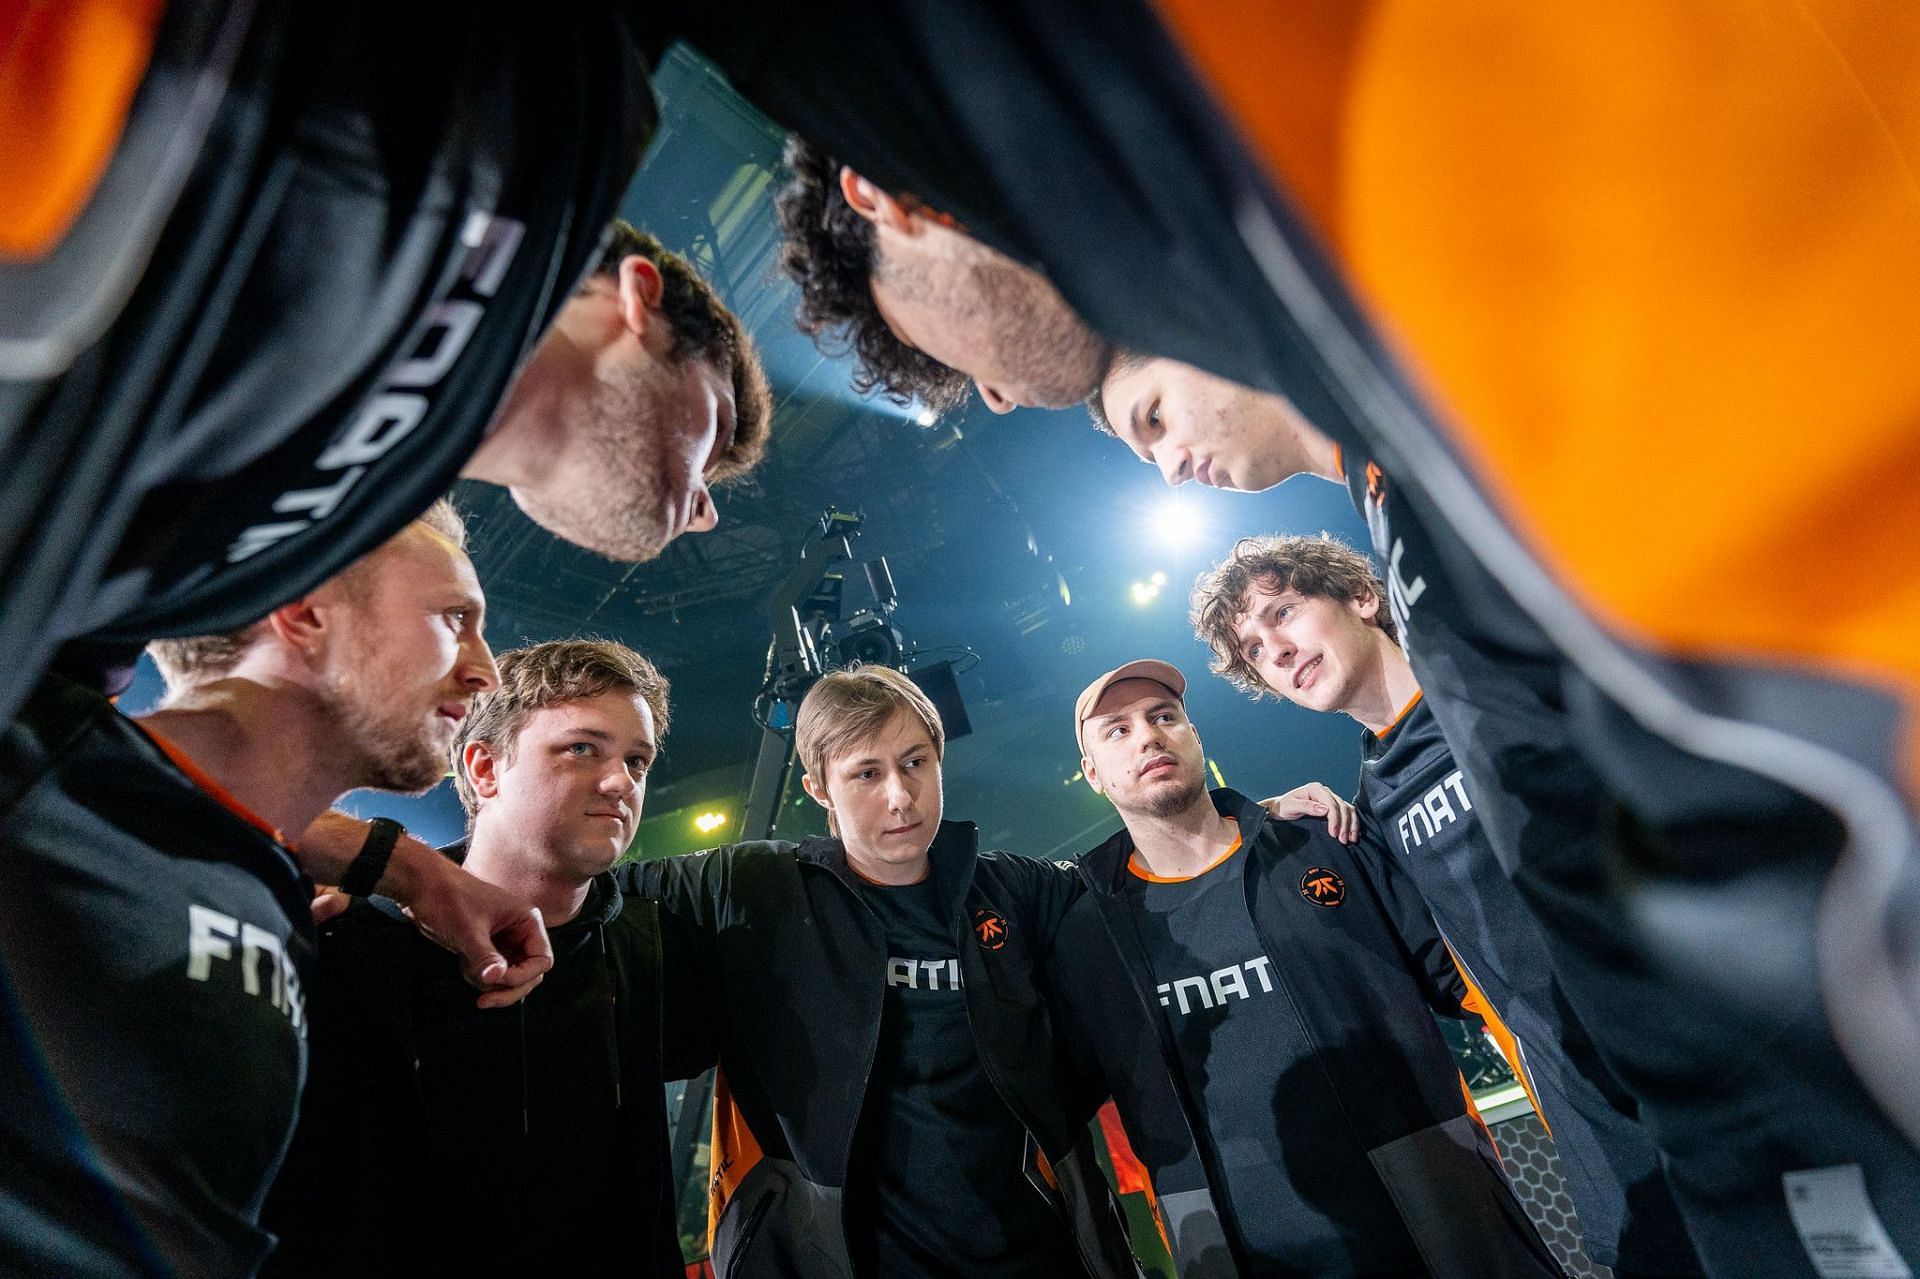 Derke with his Fnatic teammates (Image via Riot Games)